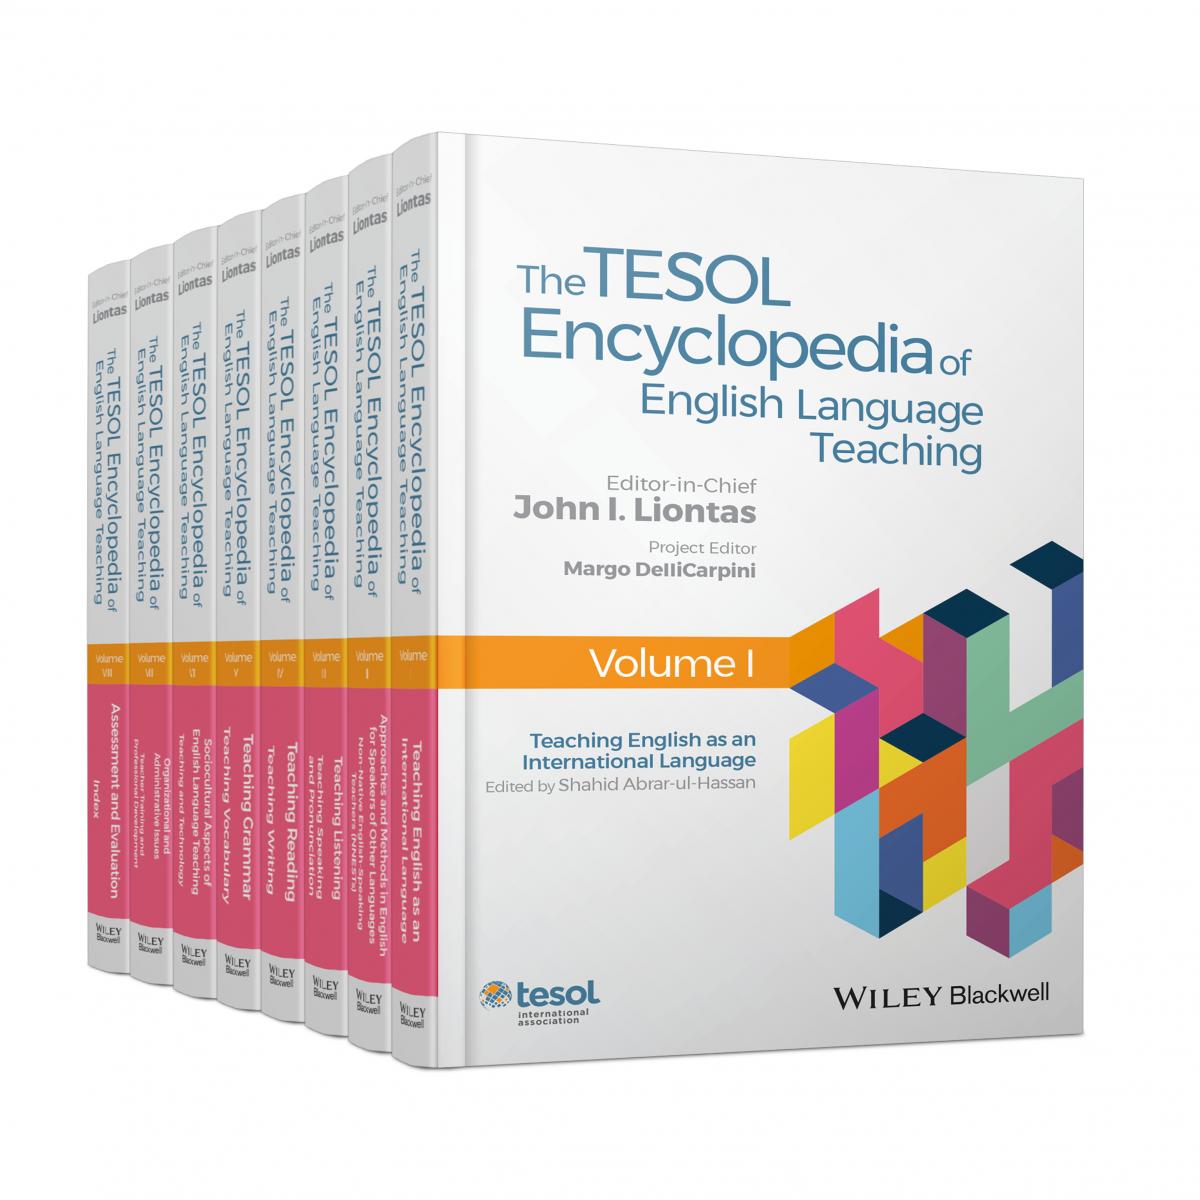 Series of TESOL Encyclopedia of the English Language books